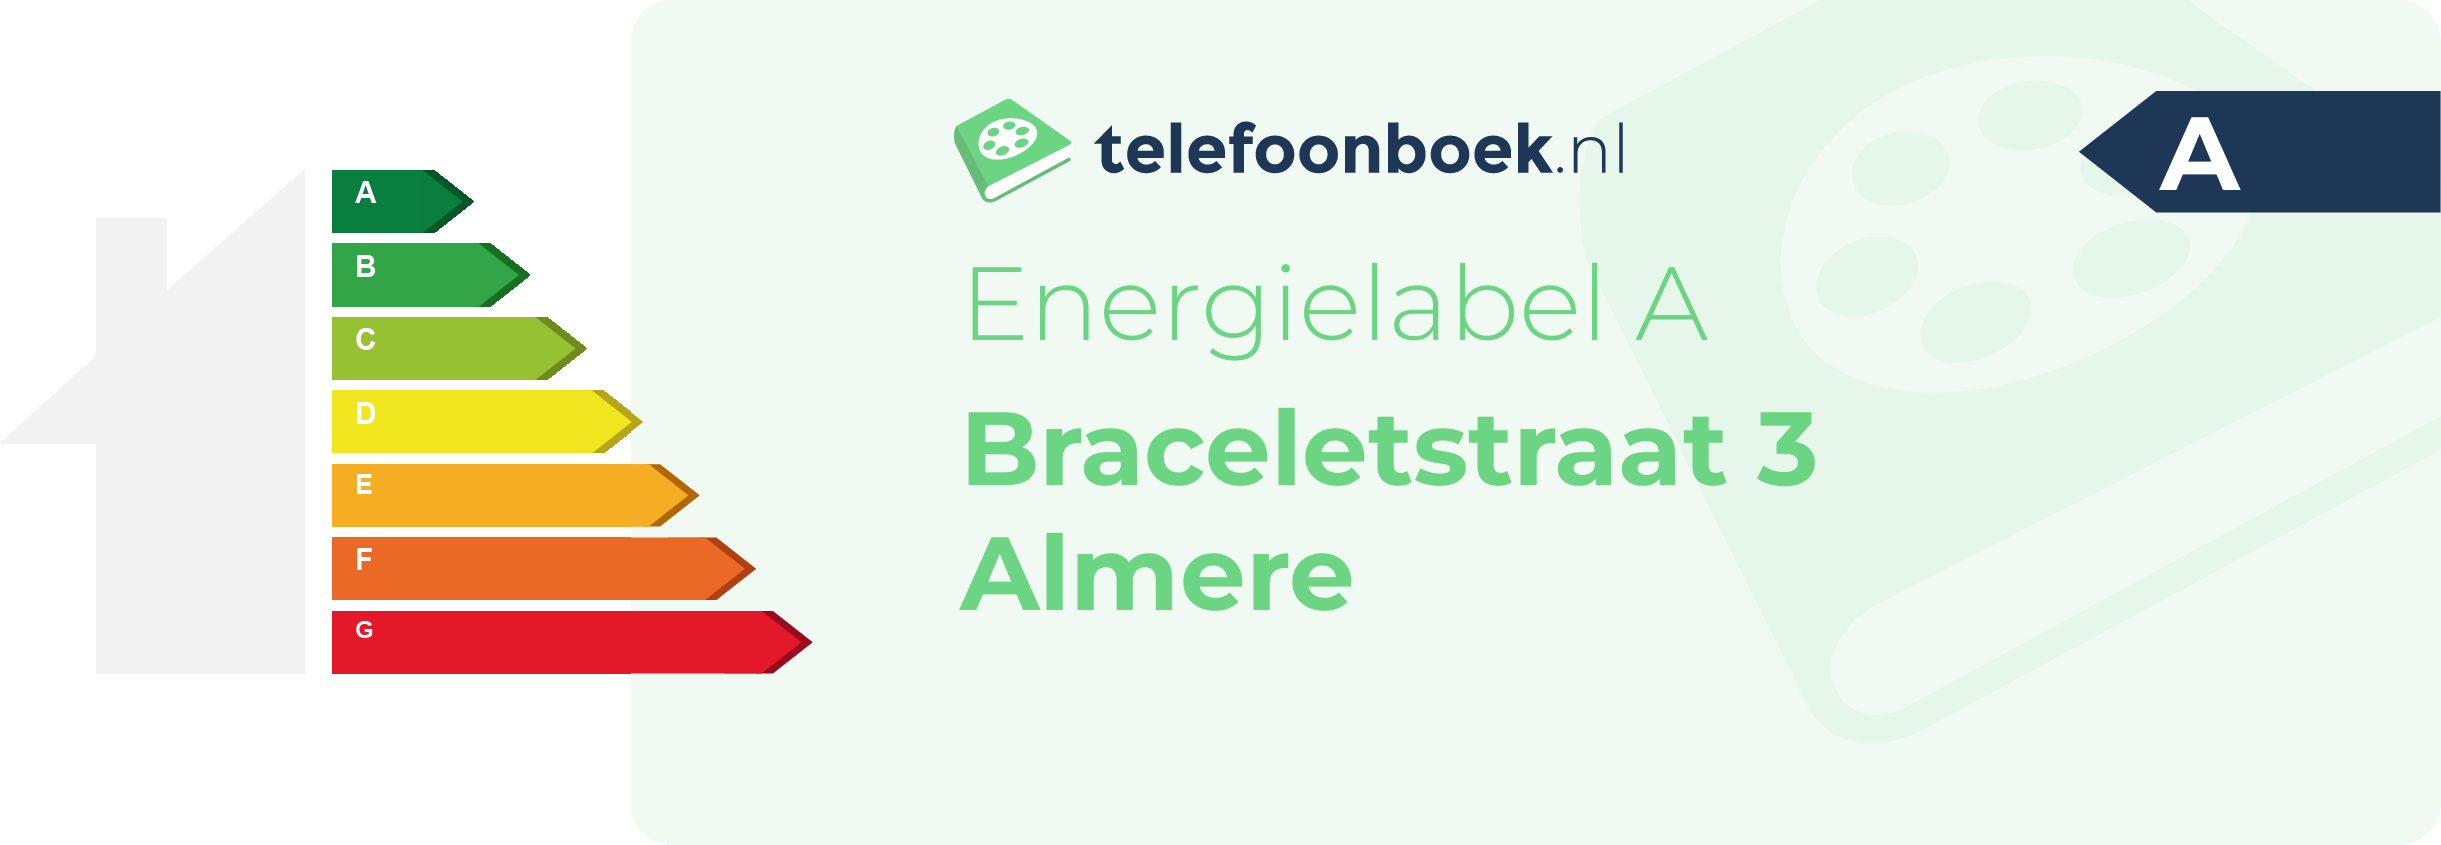 Energielabel Braceletstraat 3 Almere